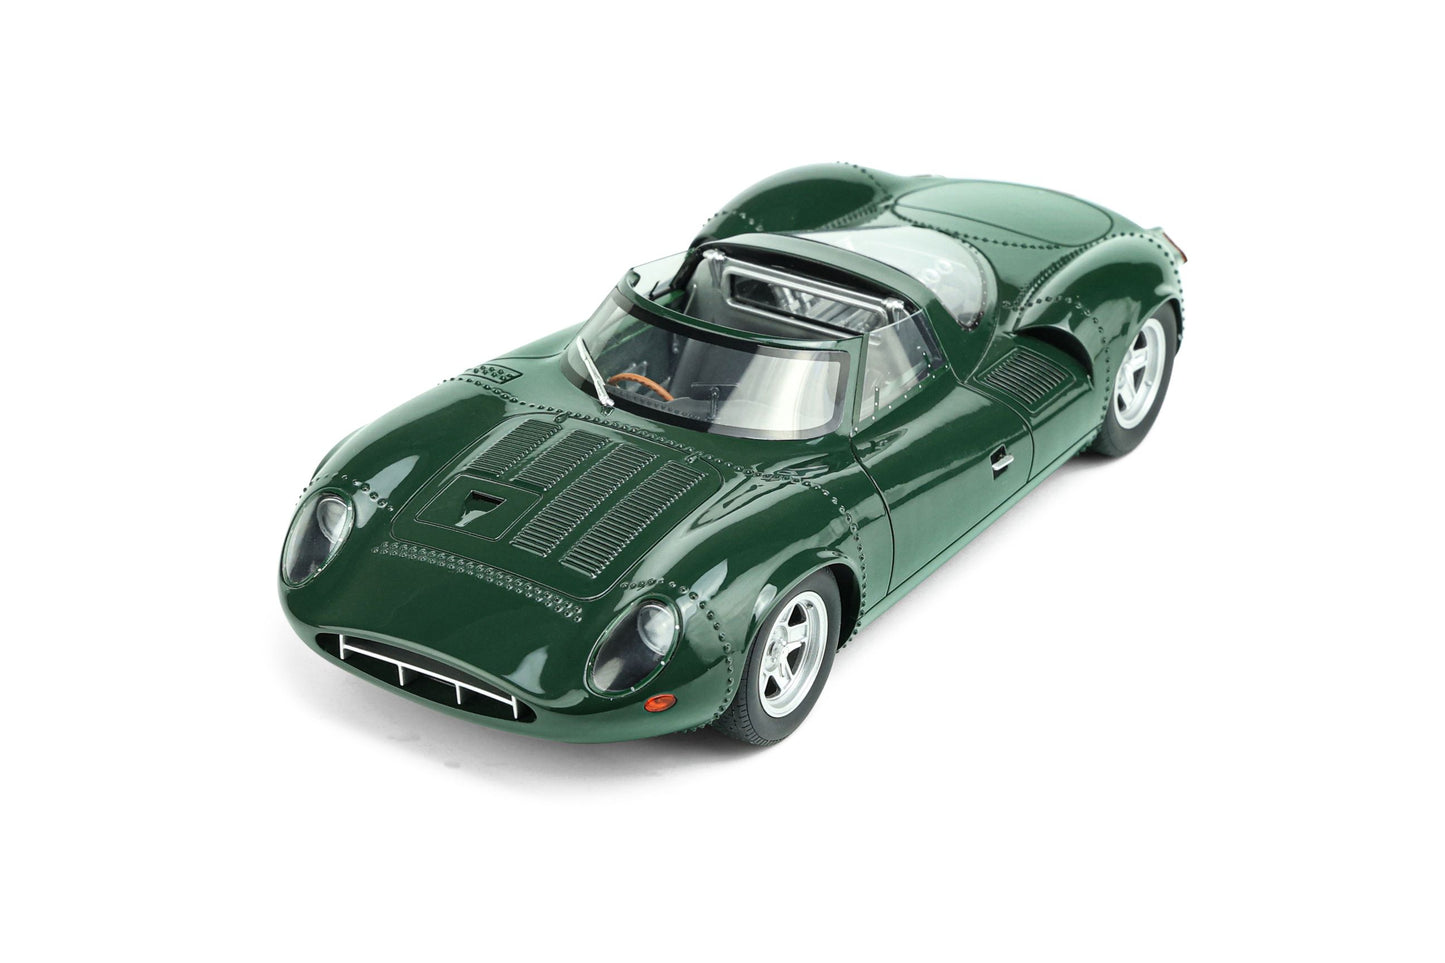 GT Spirit - Jaguar XJ13 Le Mans "Prototype" (British Racing Green) 1:18 Scale Model Car